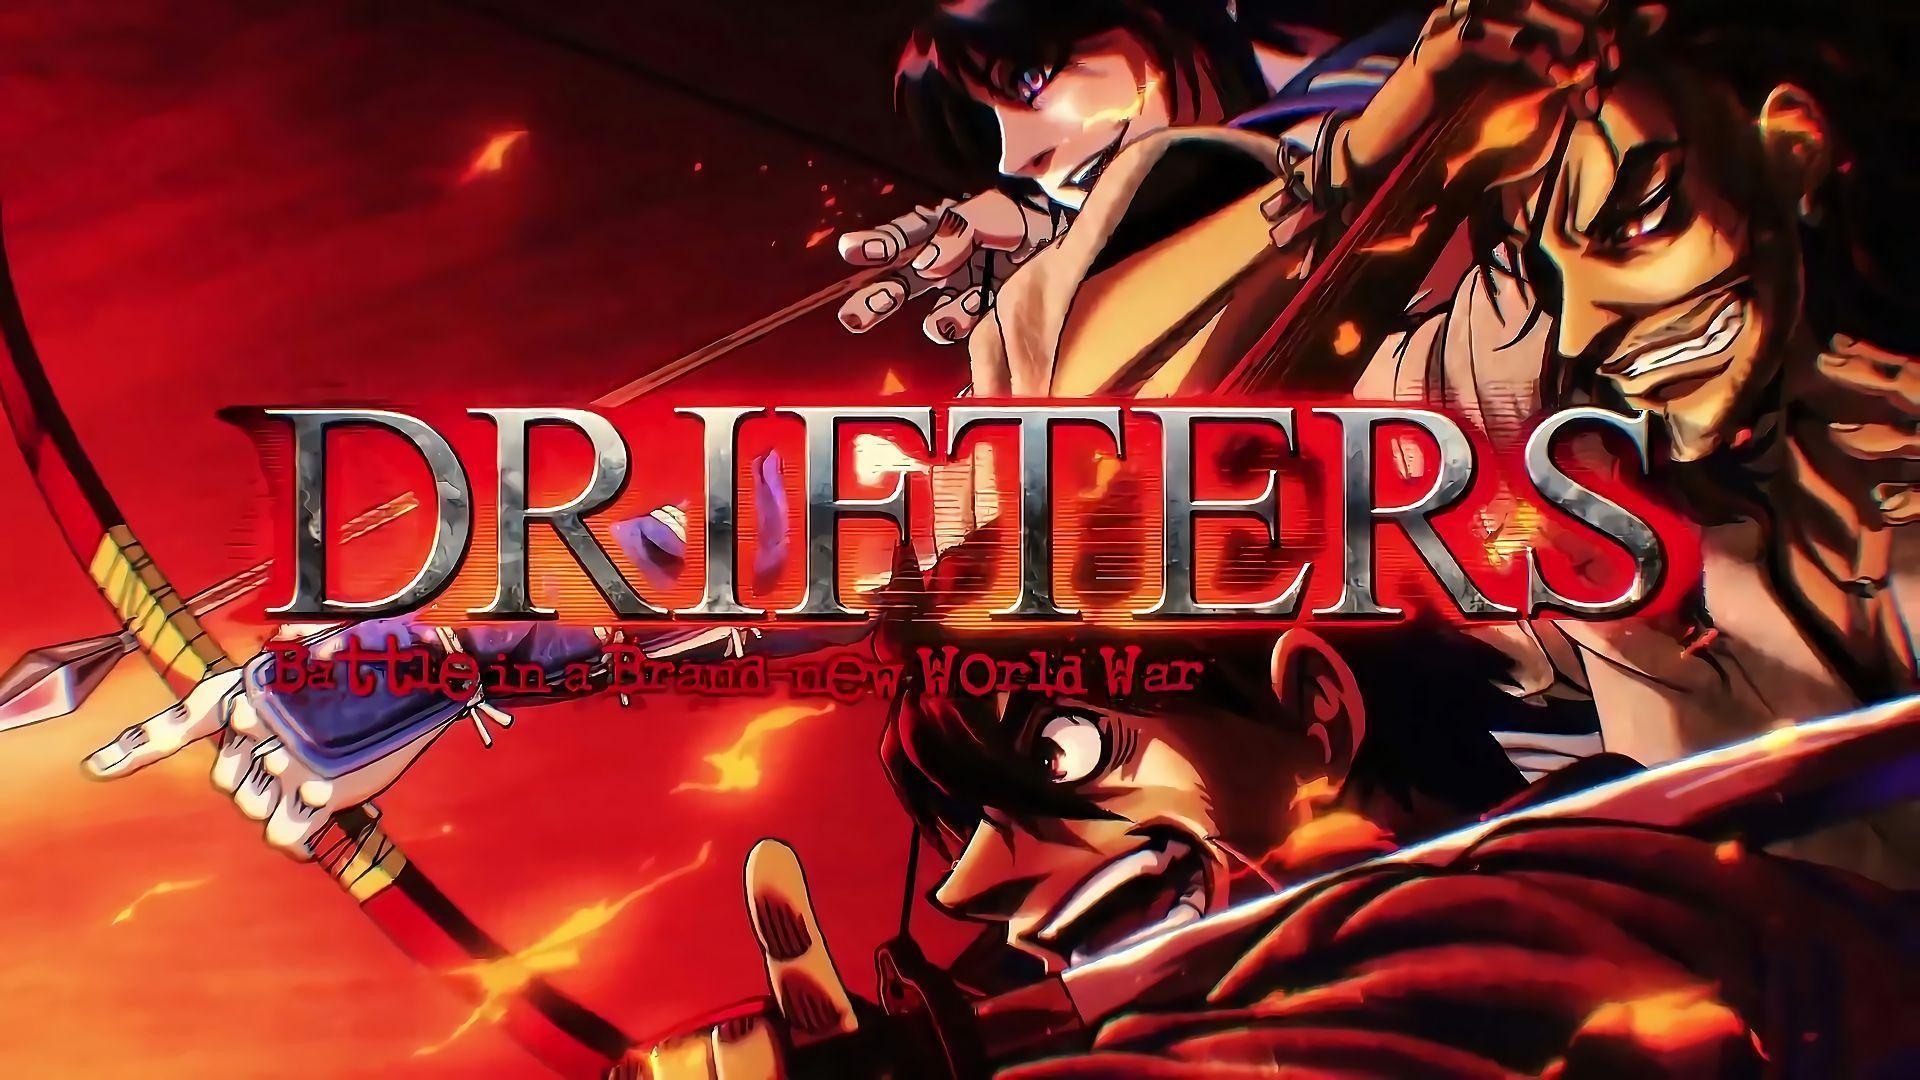 Anime Drifters HD Wallpaper